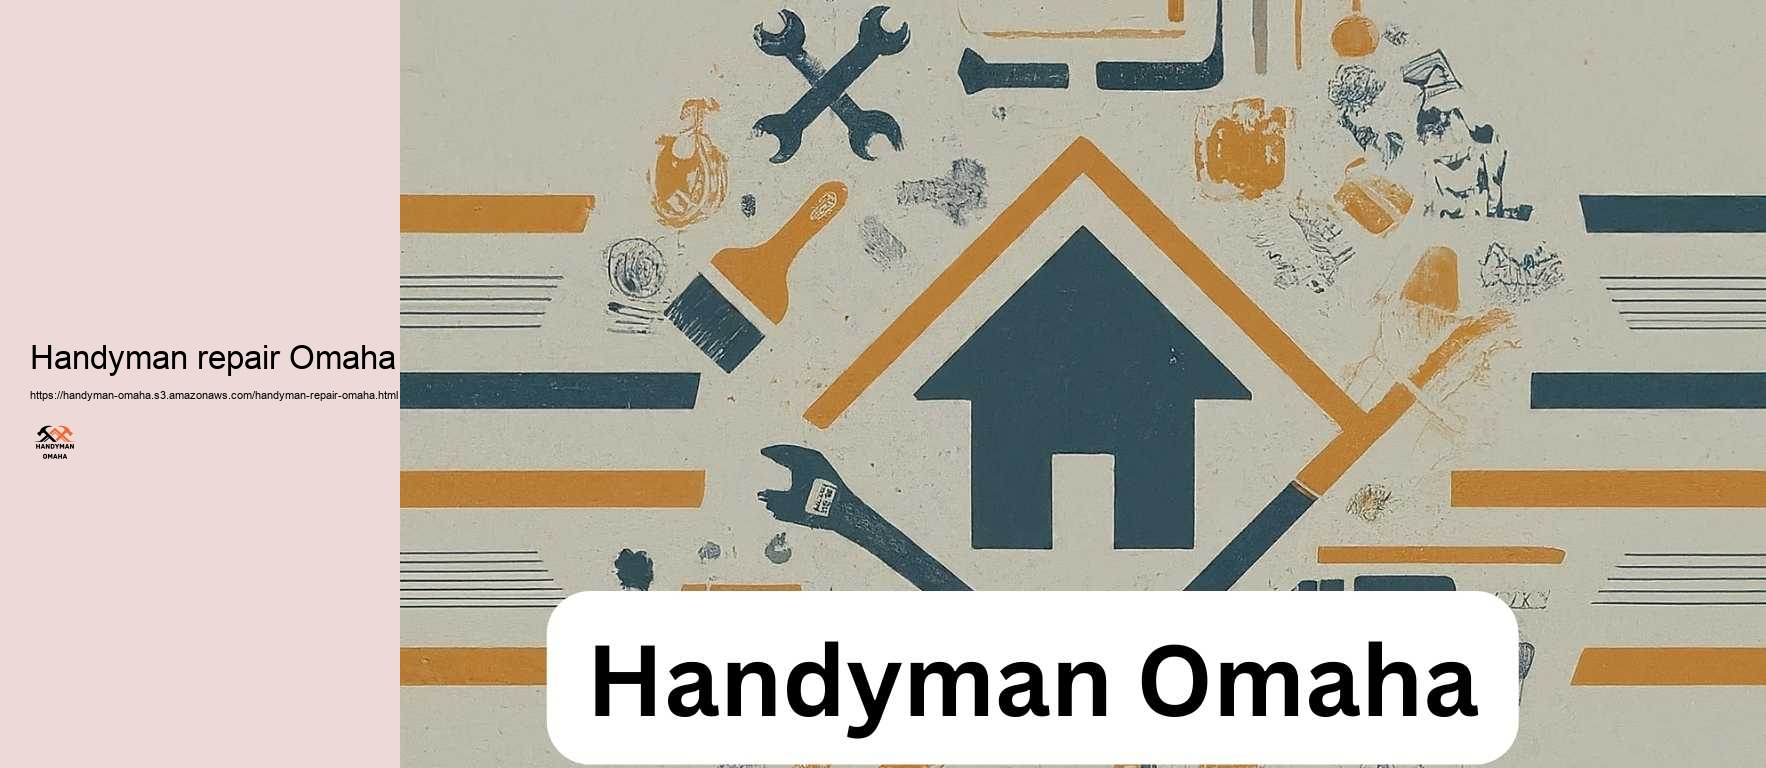 Handyman repair Omaha